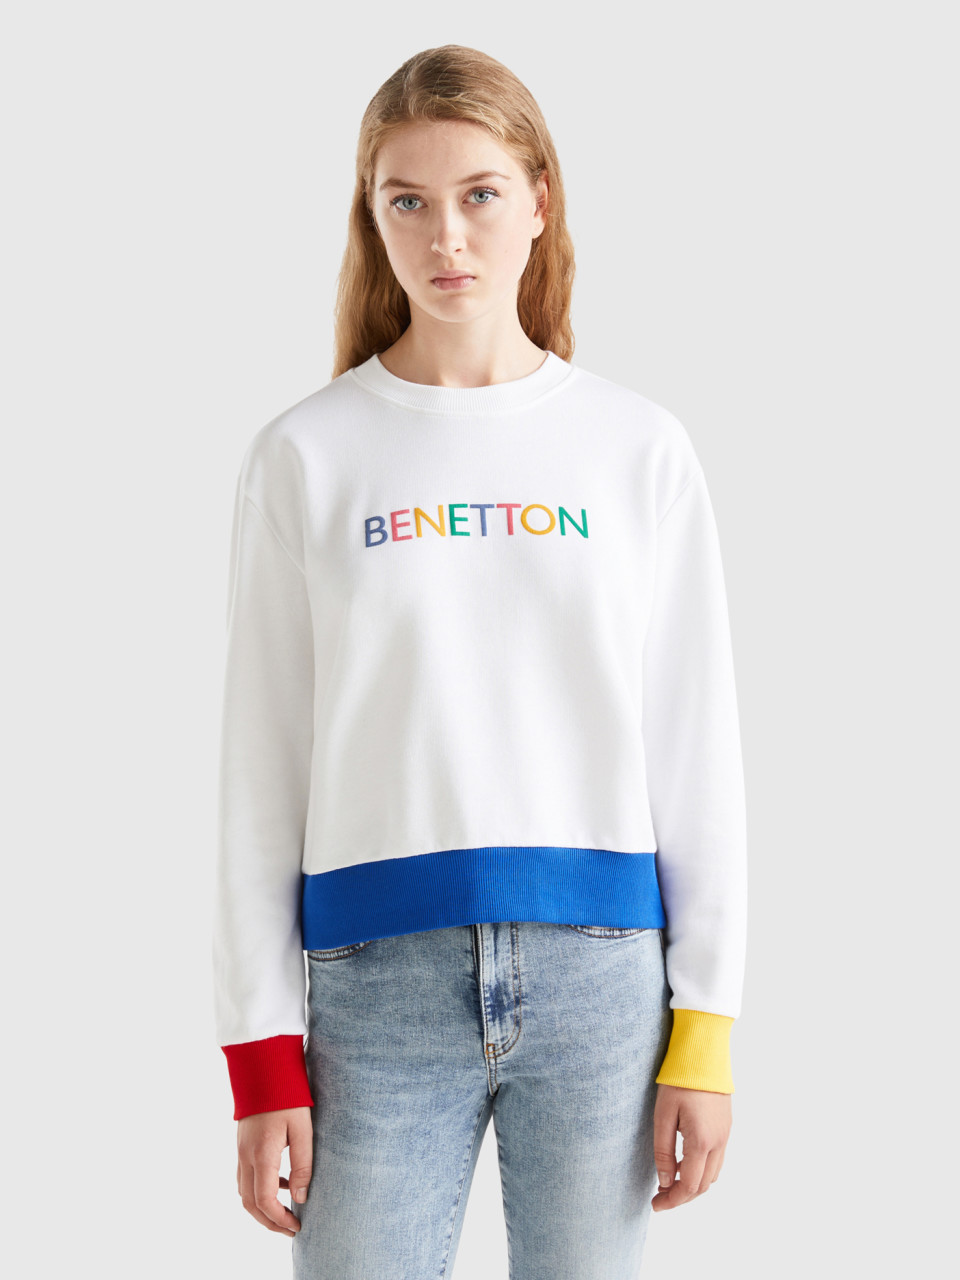 Benetton, Pullover Sweatshirt With Logo Print, White, Women